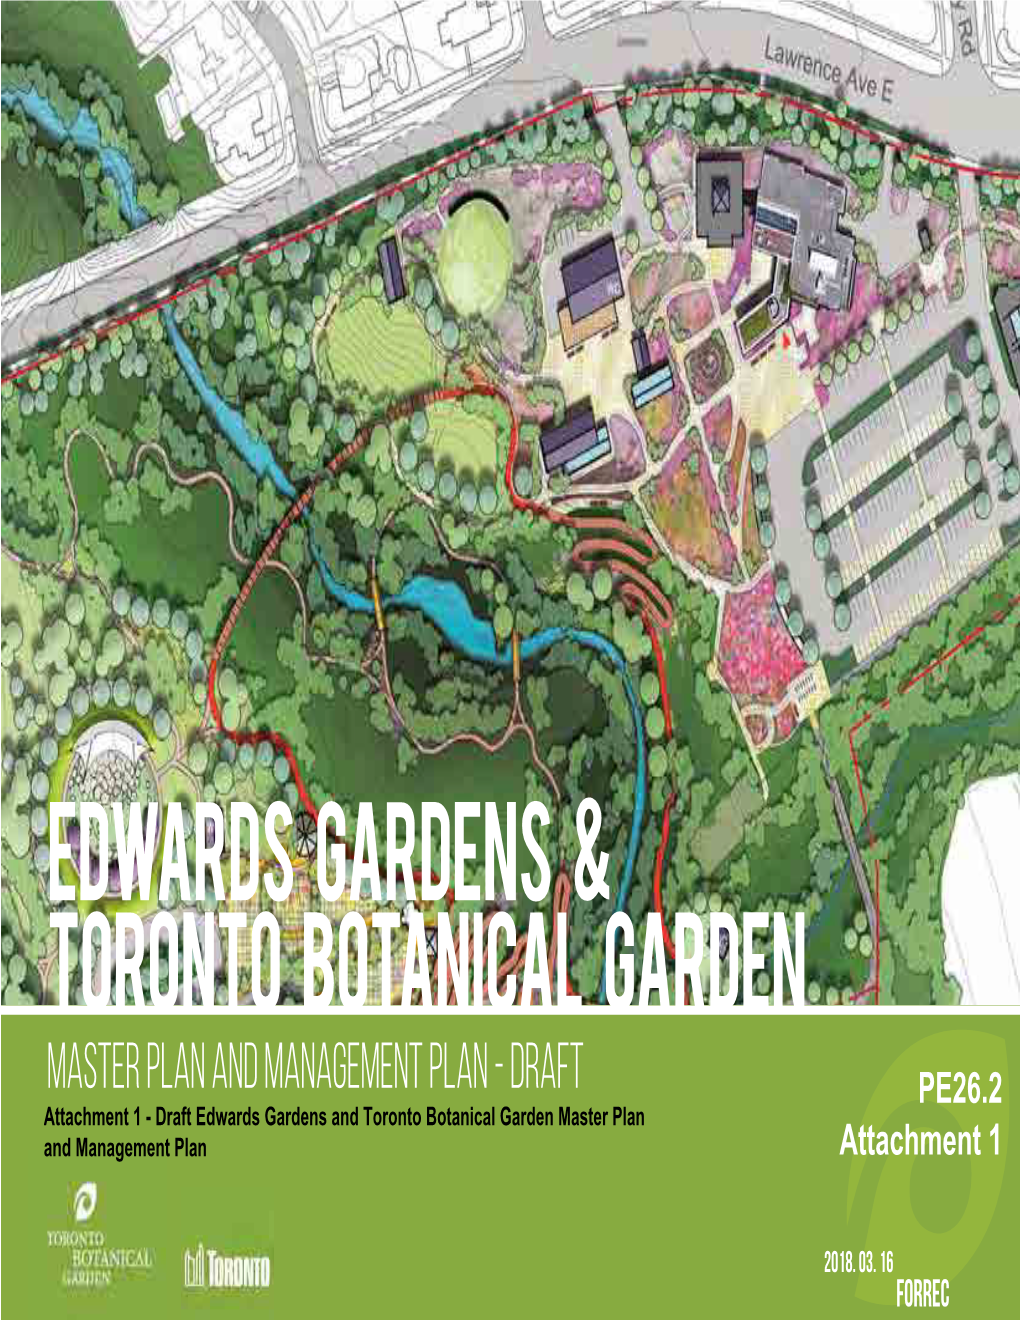 Draft Edwards Gardens and Toronto Botanical Garden Master Plan And